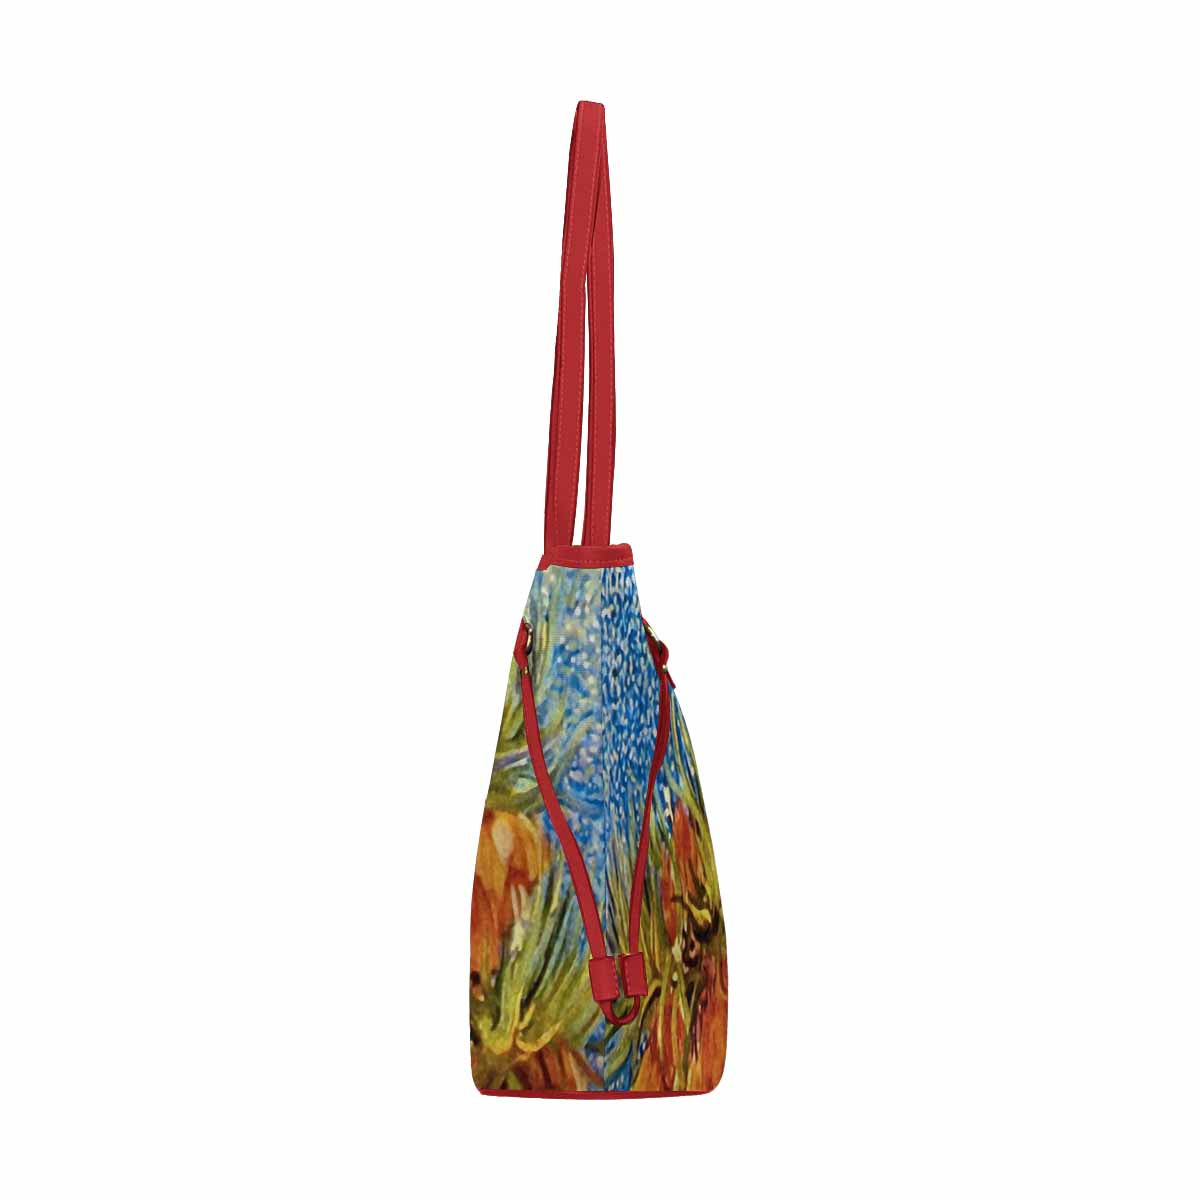 Vintage Floral Handbag, Classic Handbag, Mod 1695361 Design 42, RED TRIM